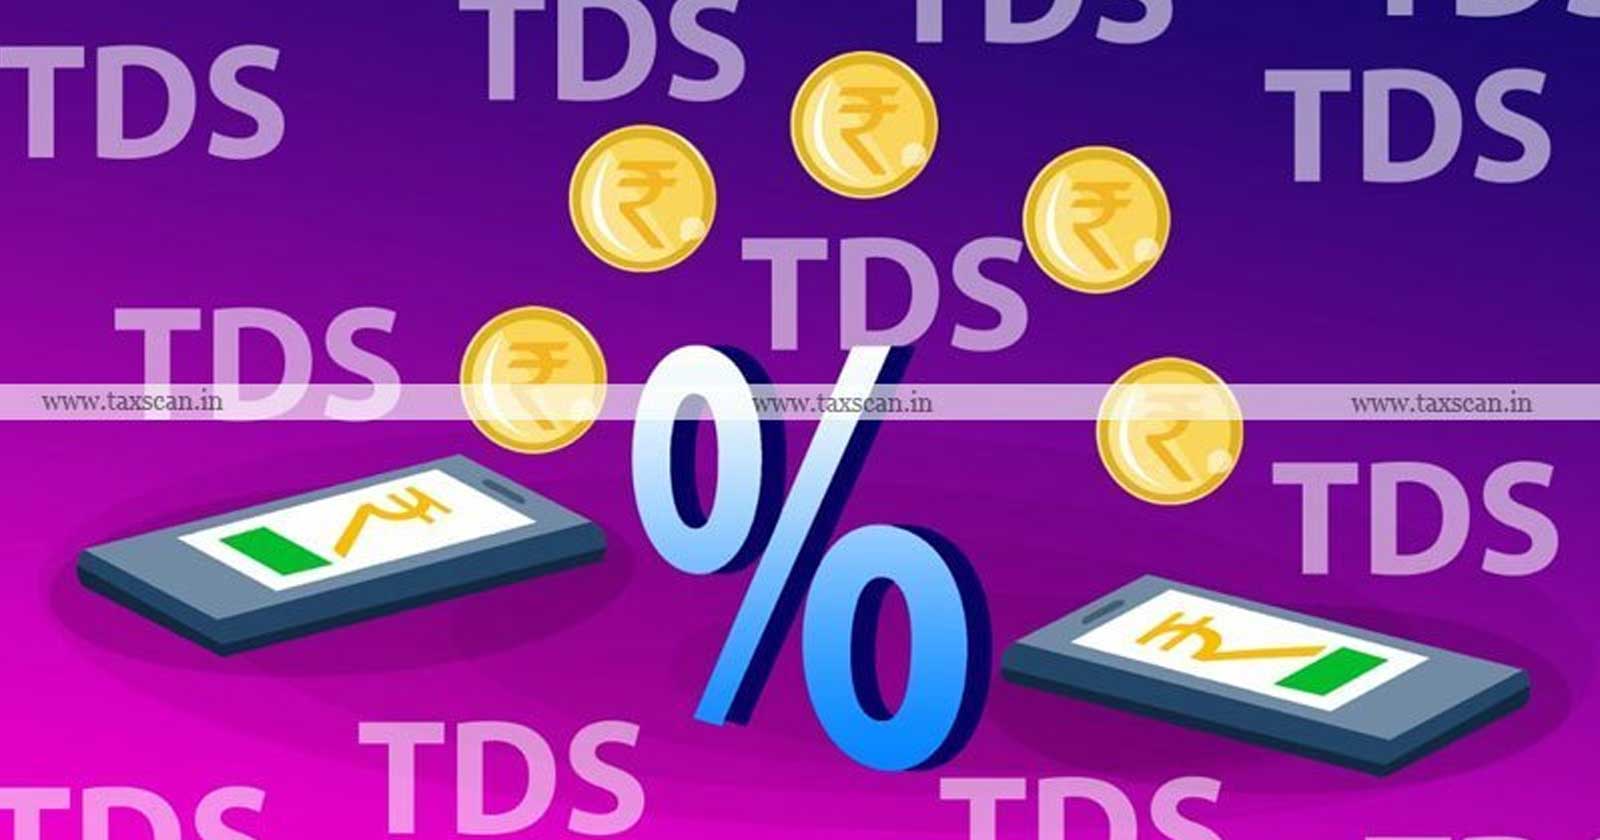 Late Fee - Tds - TDS Default - ITAT - Income Tax - taxscan